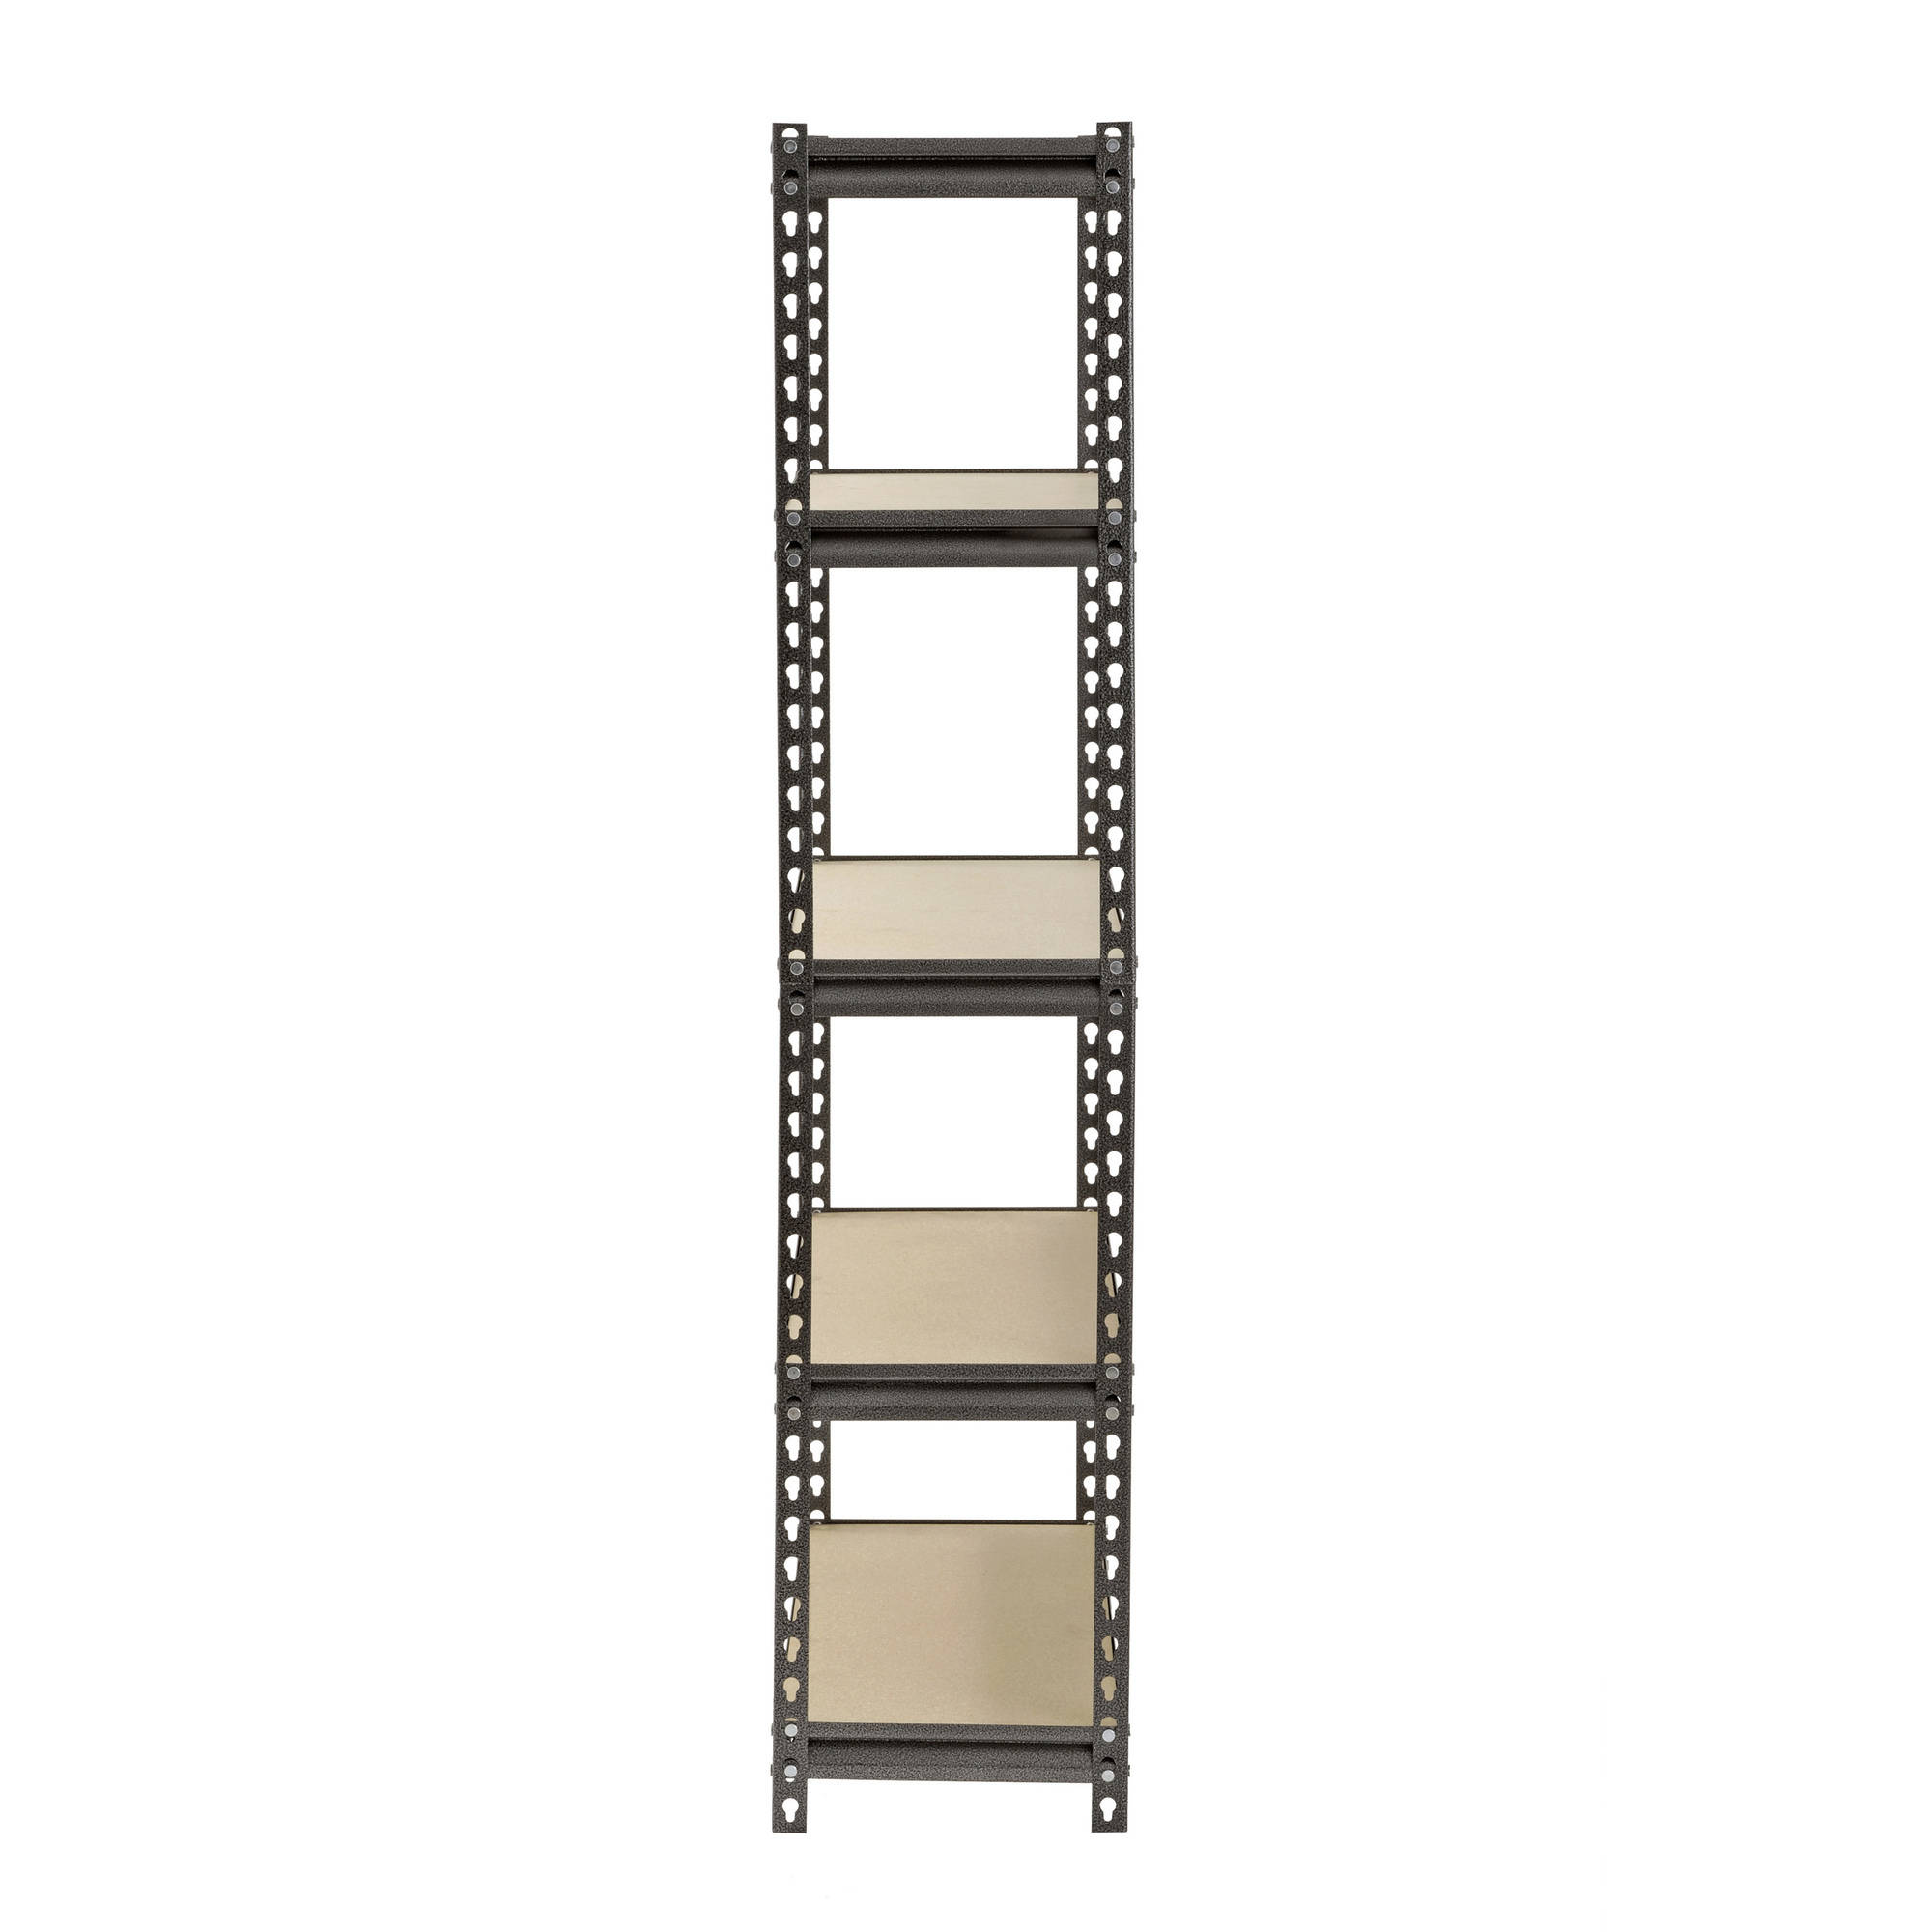 Muscle Rack 30"W x 12"D x 60"H 5-Shelf Steel Freestanding Shelves, 500 lbs. Capacity per Shelf; Silver - image 3 of 6